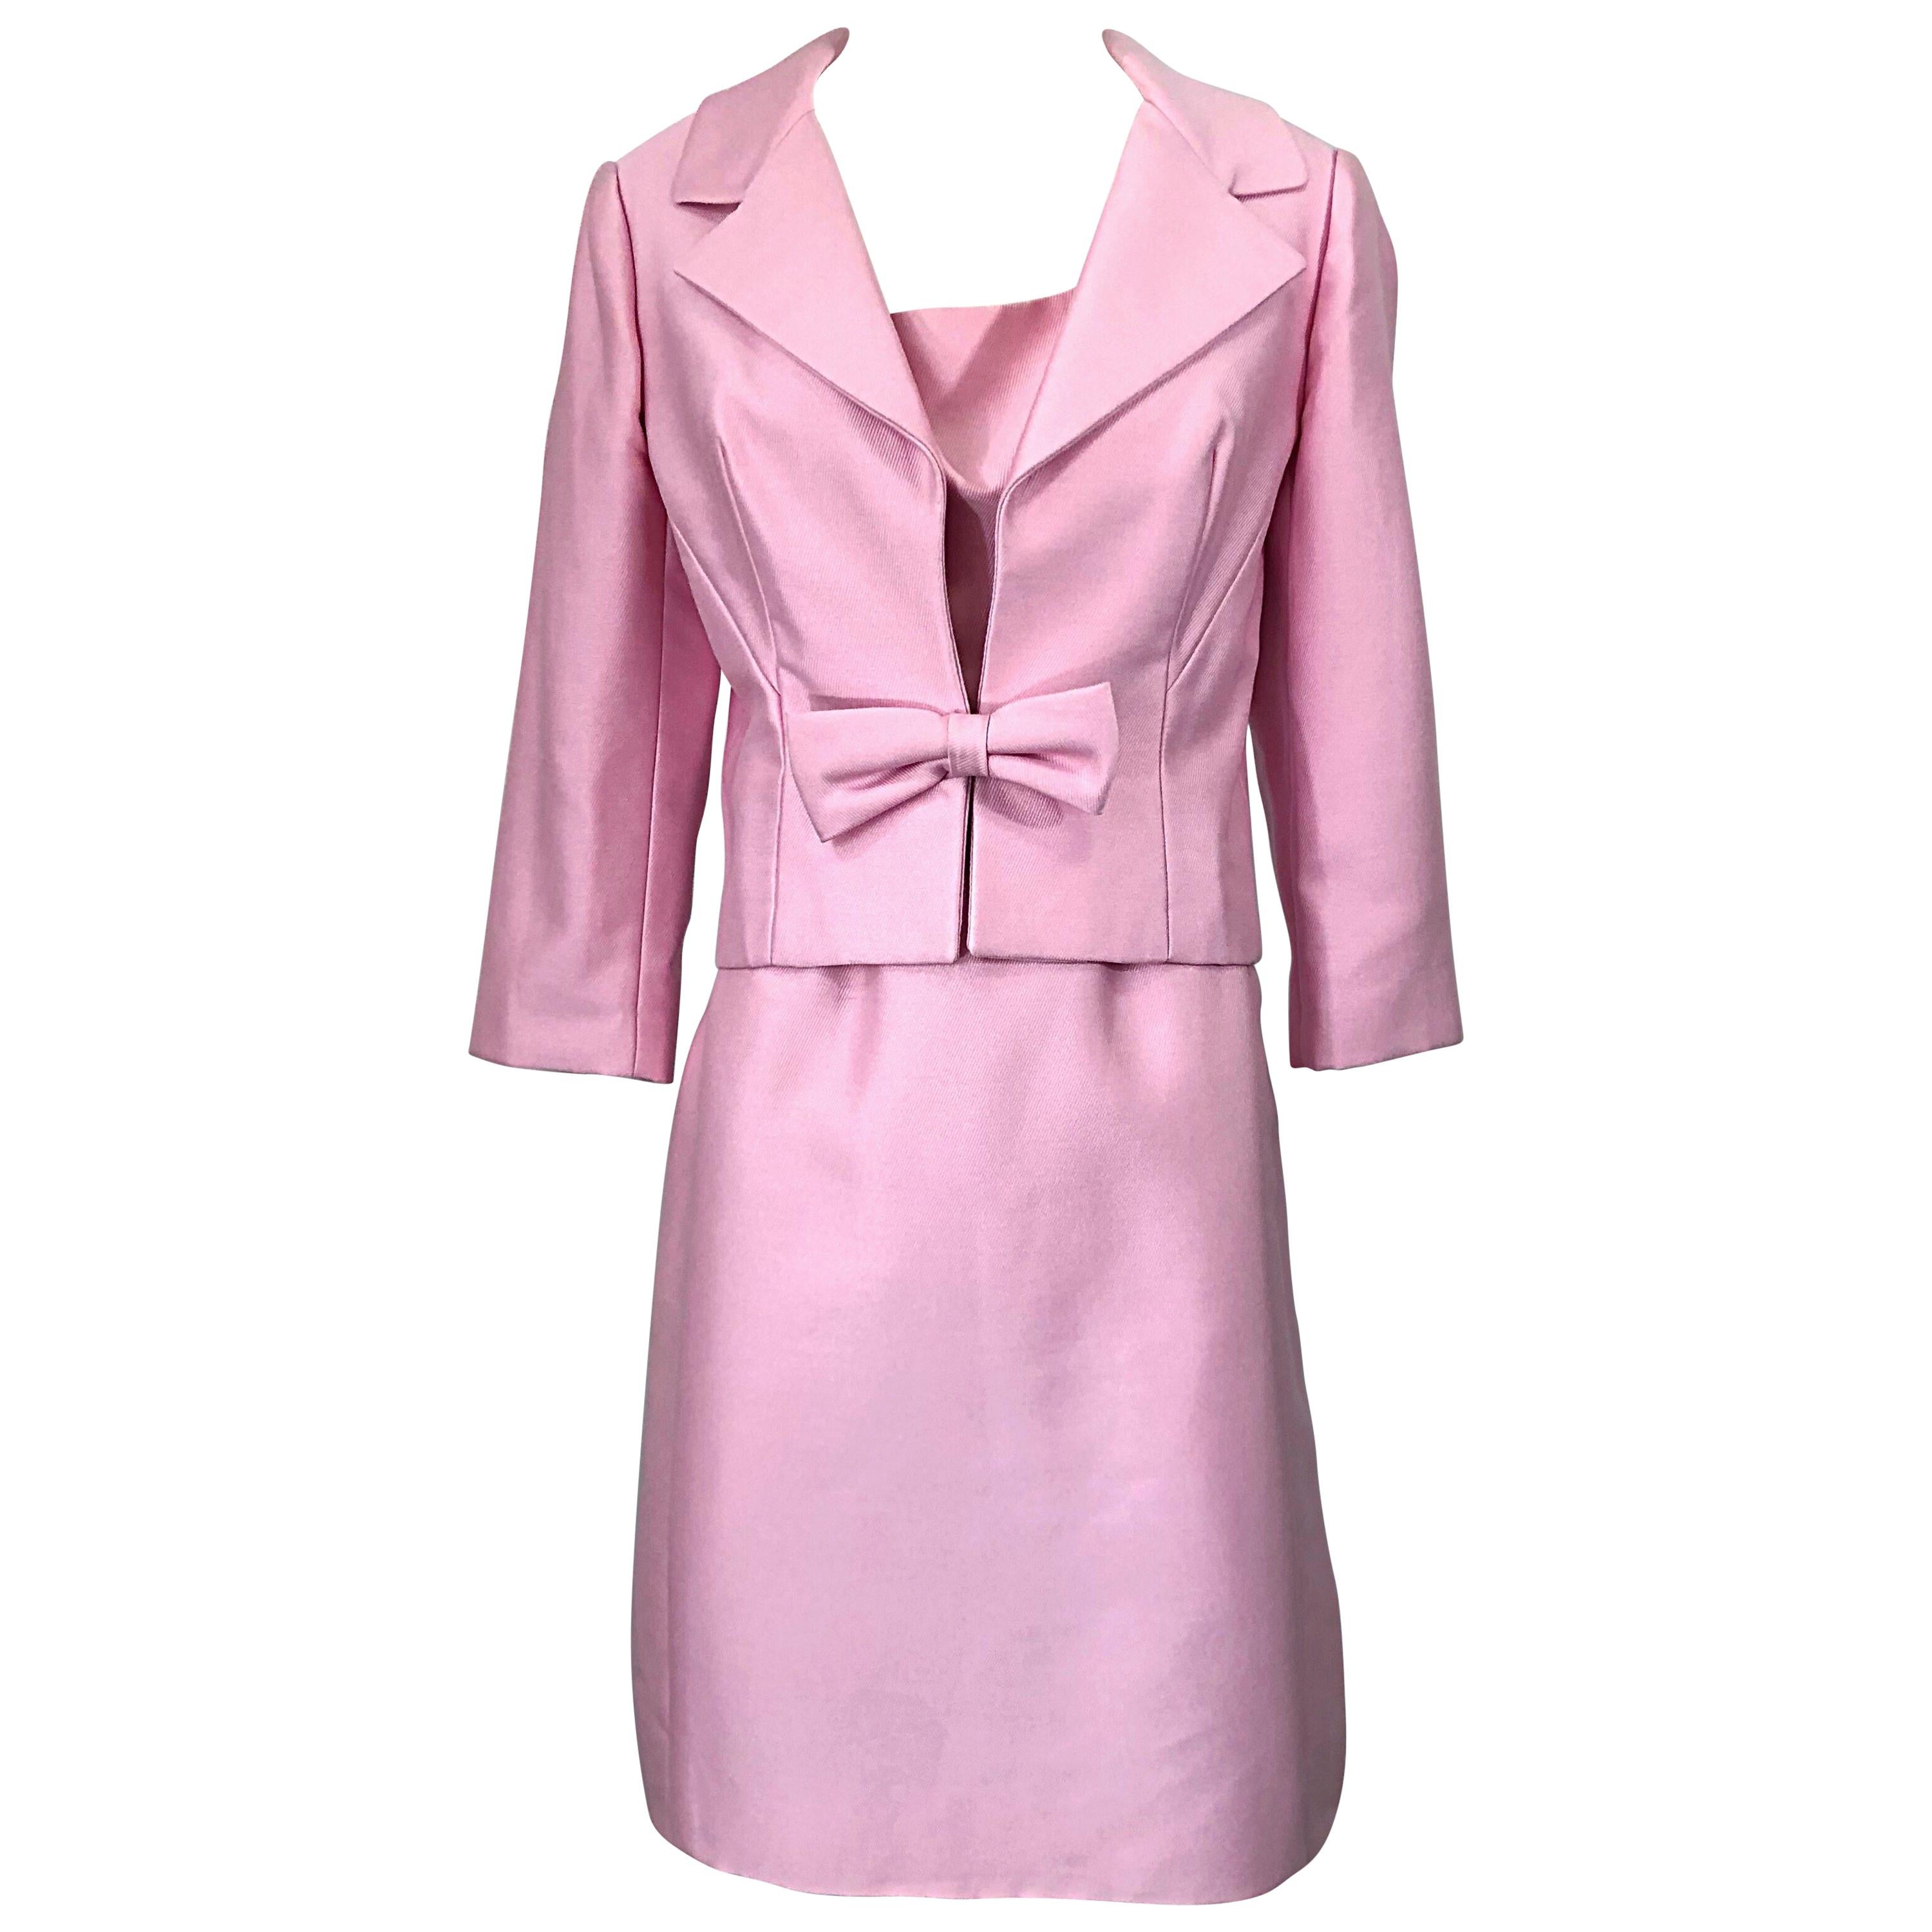 Chic 1960s Pat Sandler Light Pink Vintage 60s Silk Shift Dress and Jacket Suit